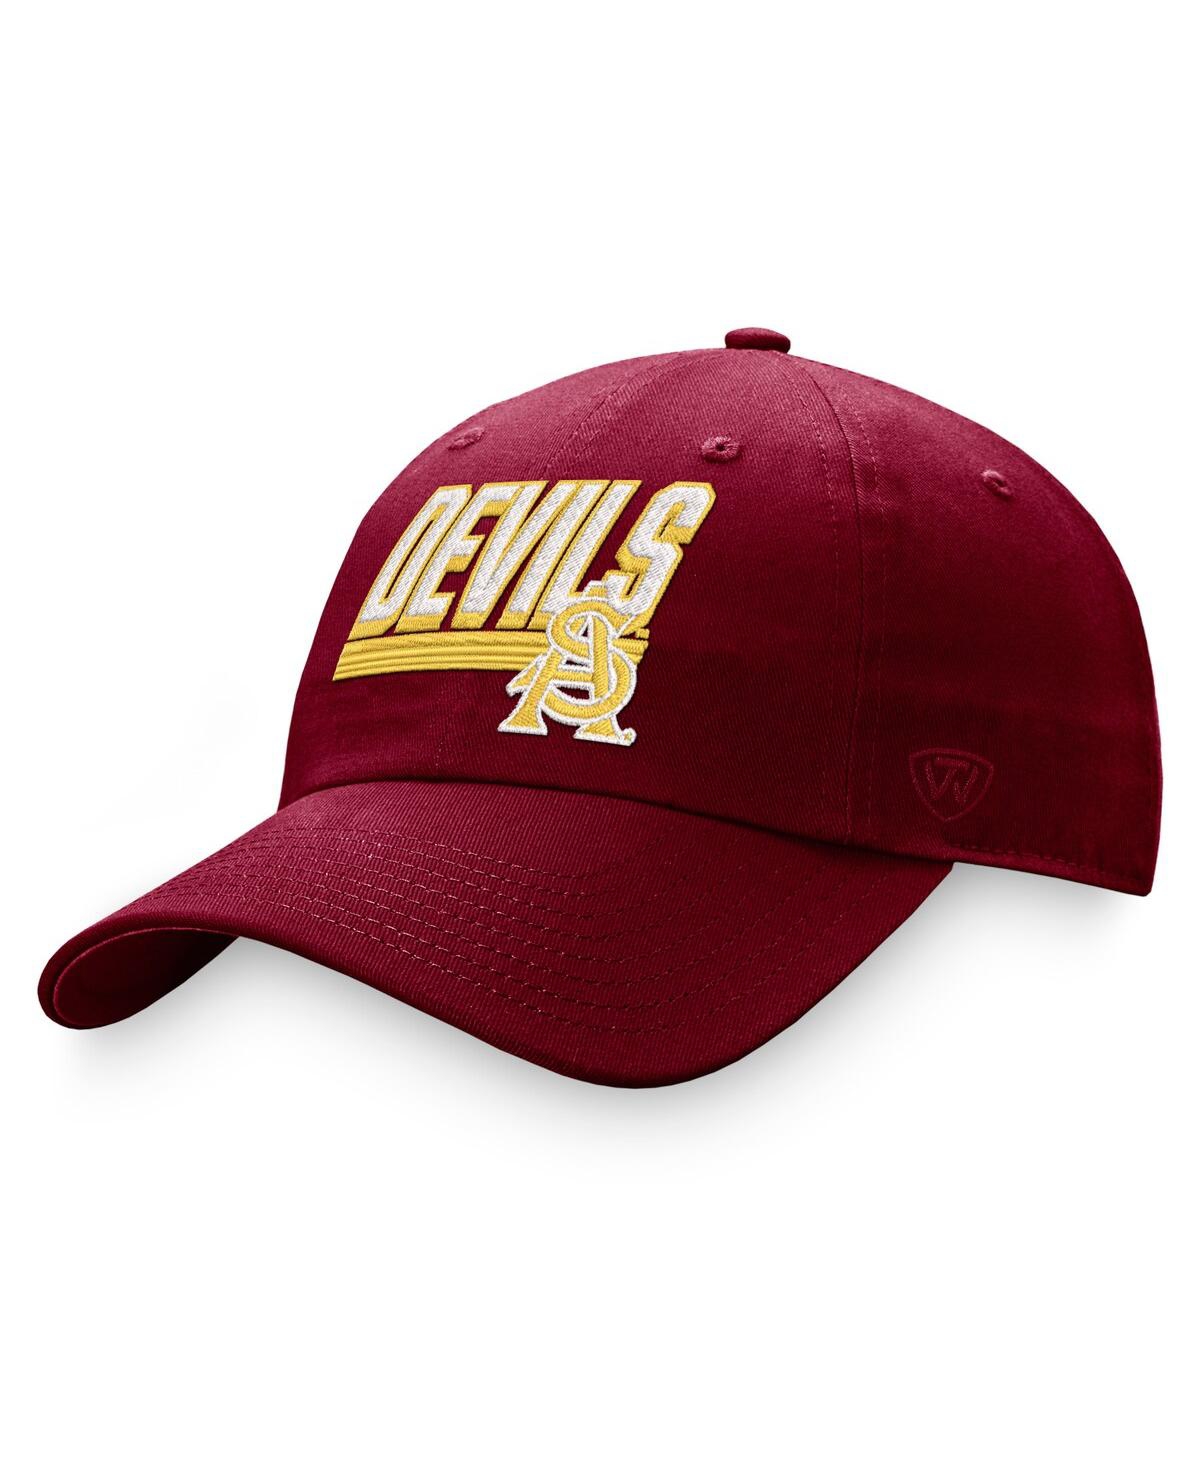 Shop Top Of The World Men's  Maroon Arizona State Sun Devils Slice Adjustable Hat